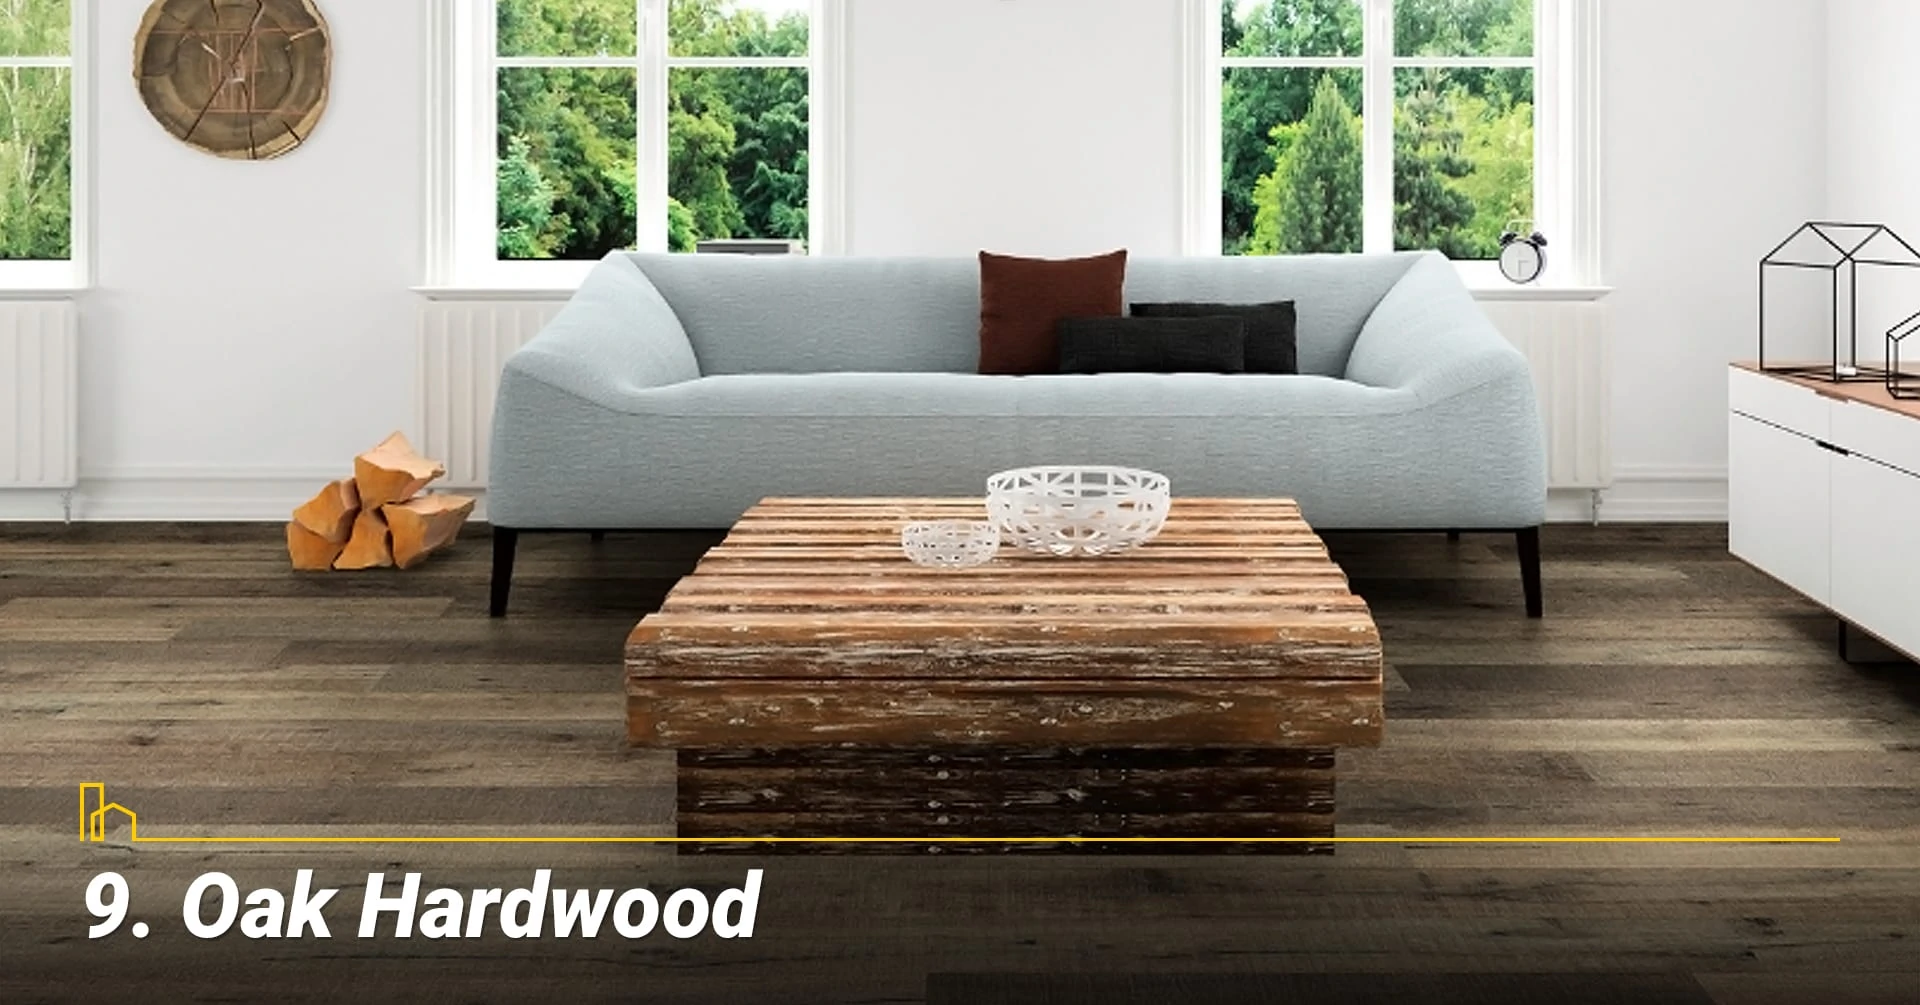 Oak Hardwood, cover your floor with oak hardwood